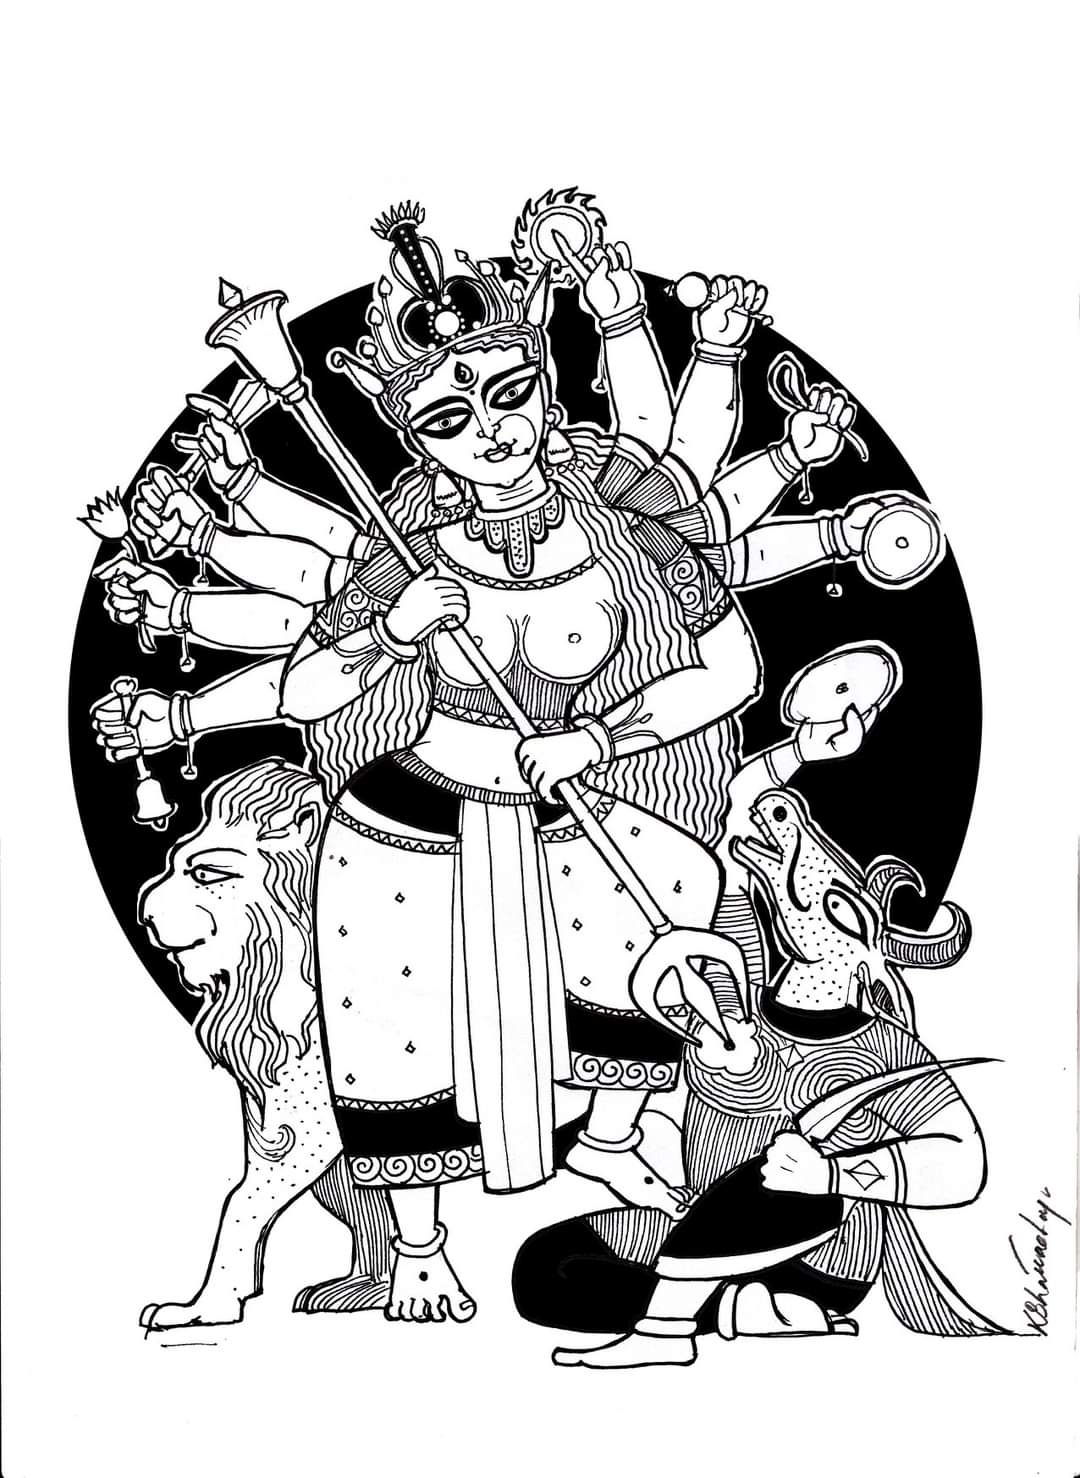 Maa Durga  Mandala Art 46 x 37 cms  International Indian Folk Art  Gallery